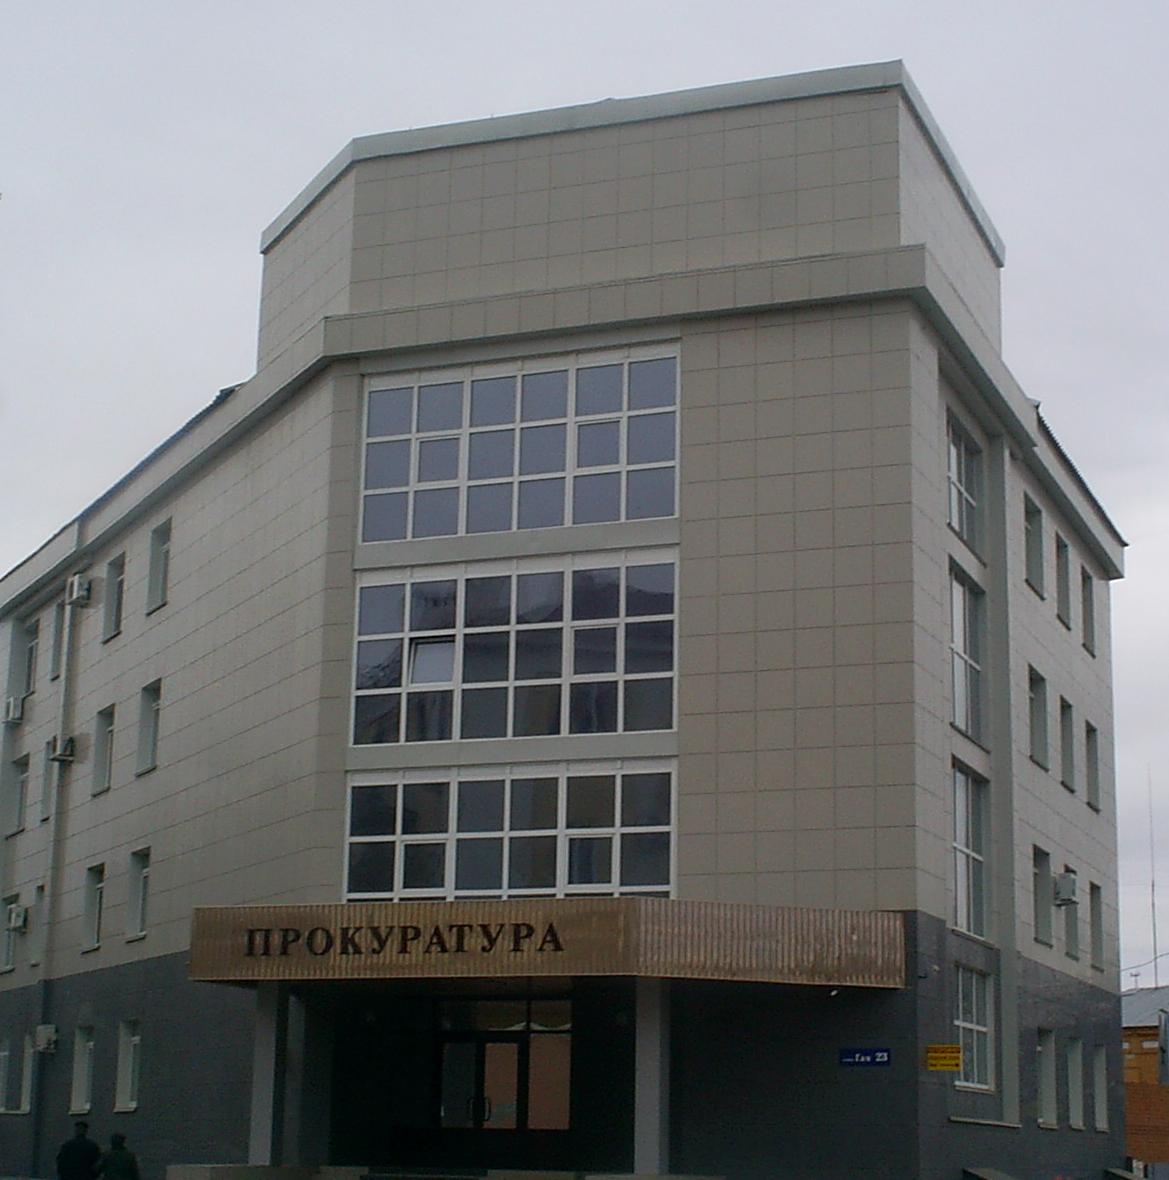 Здание прокуратуры Оренбургской области 